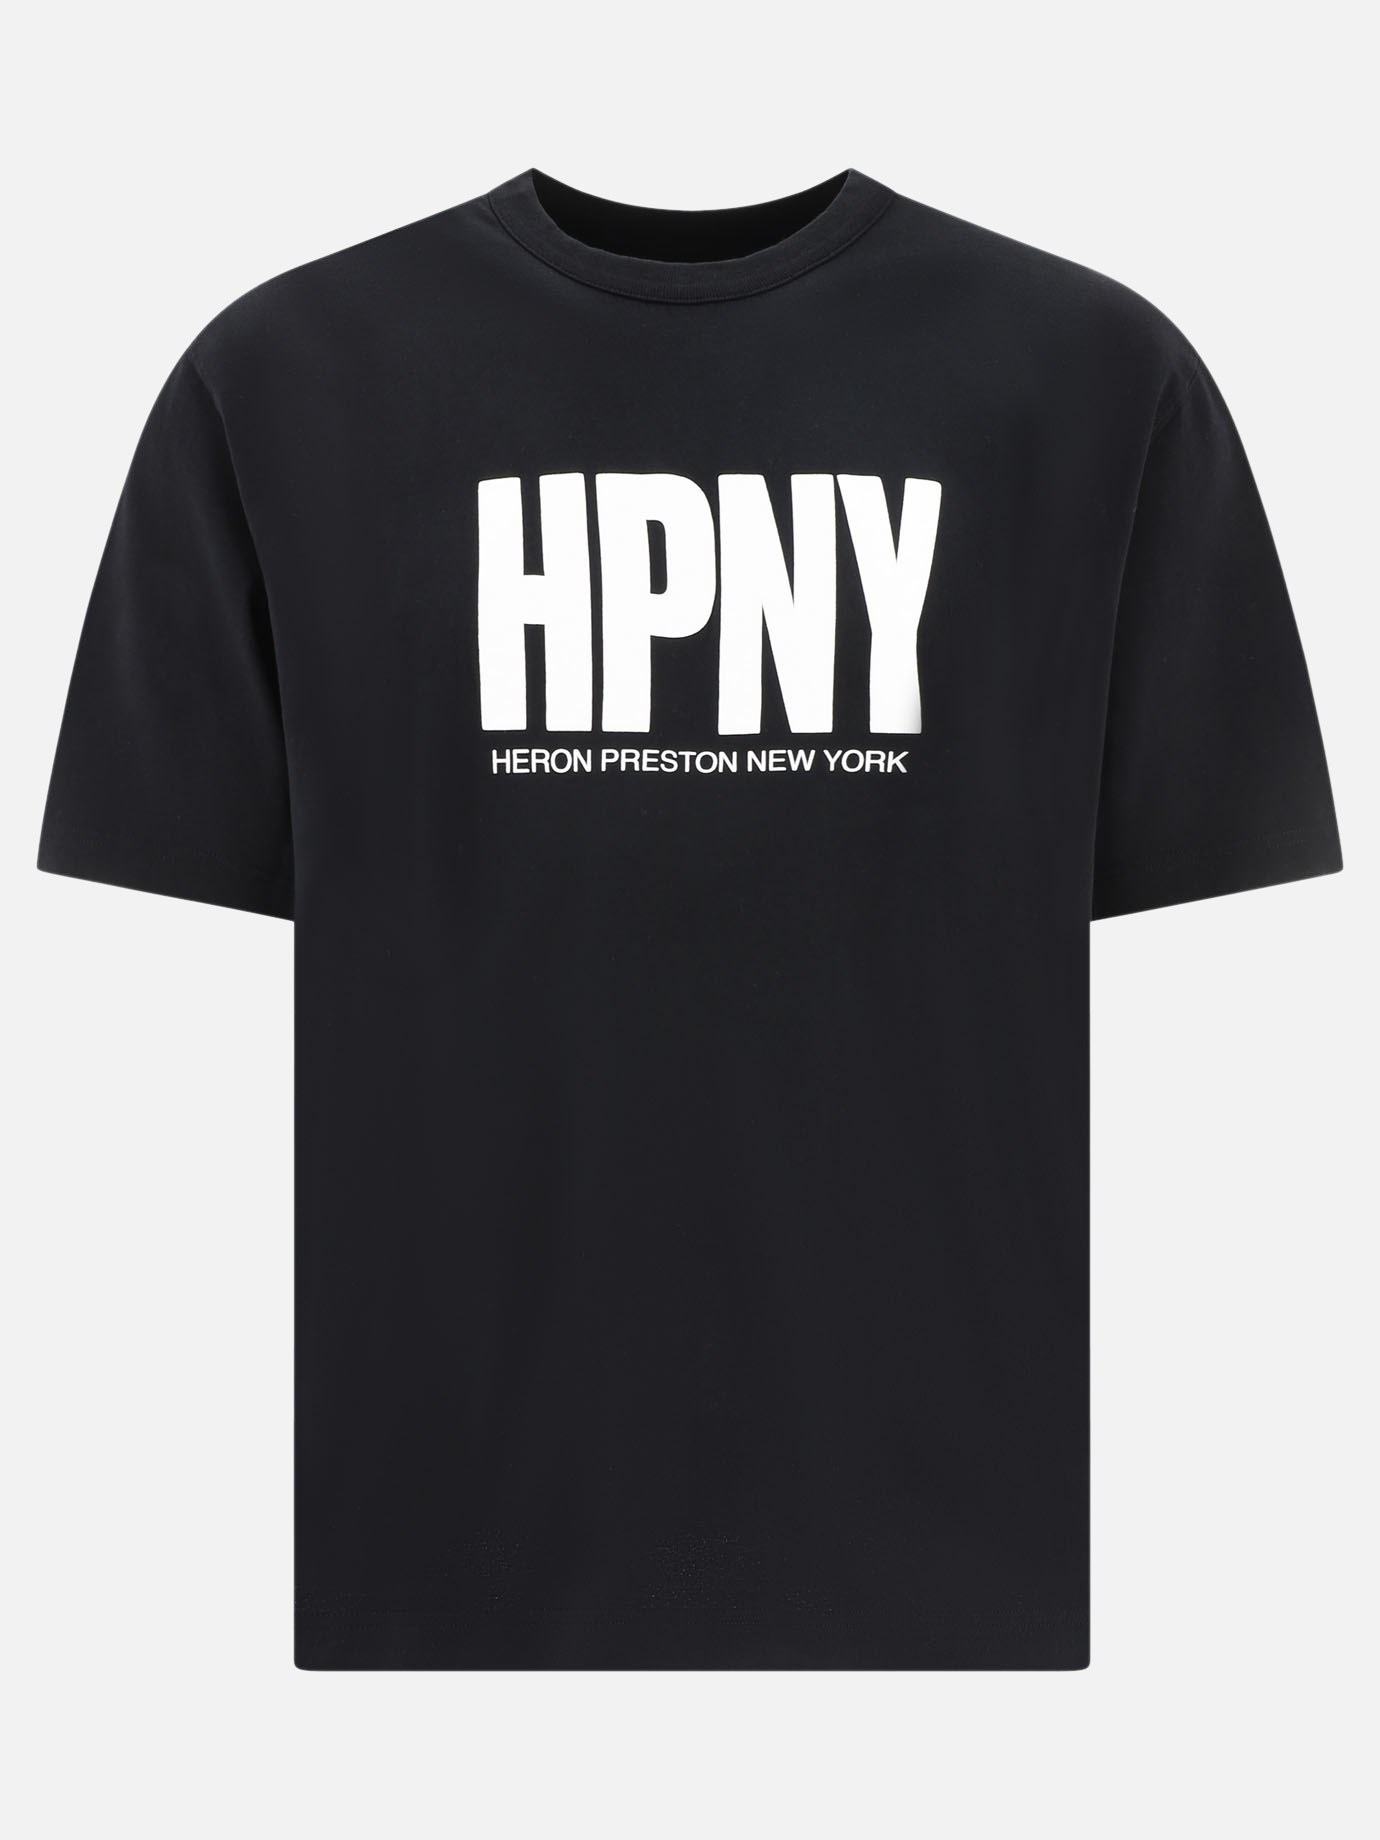 T-shirt  HPNY  by Heron Preston